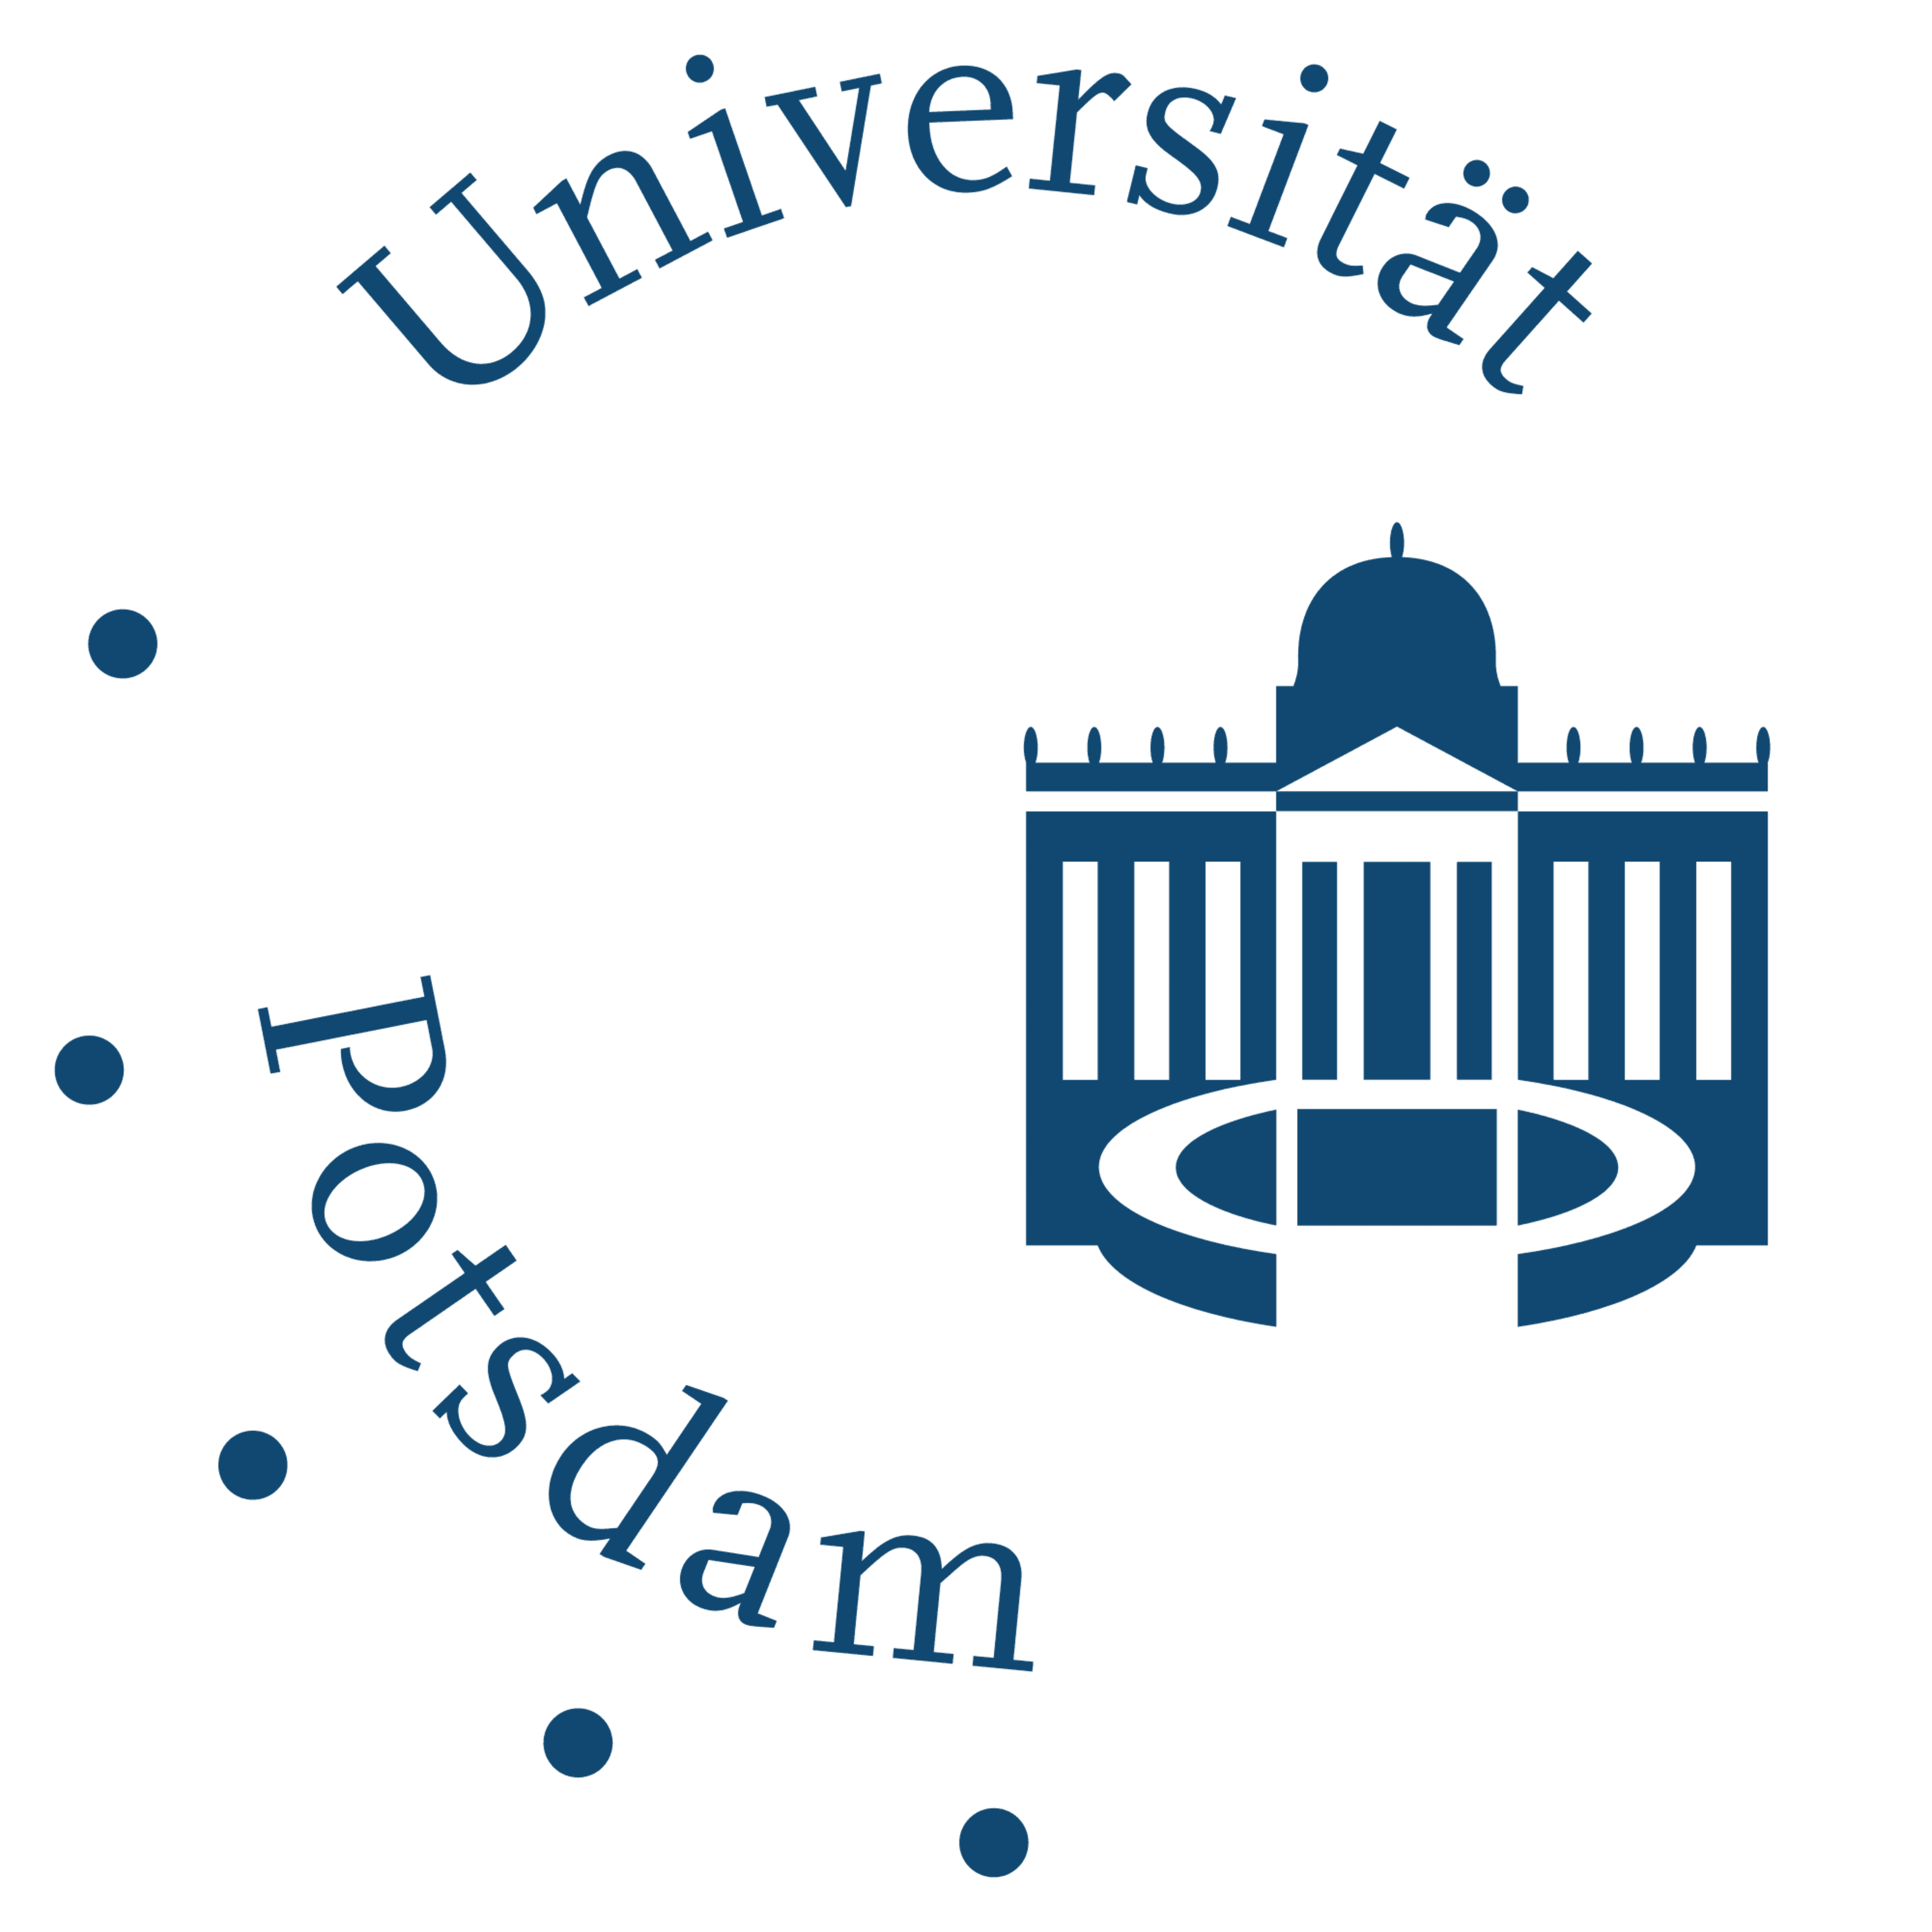 Universität Potsdam logo